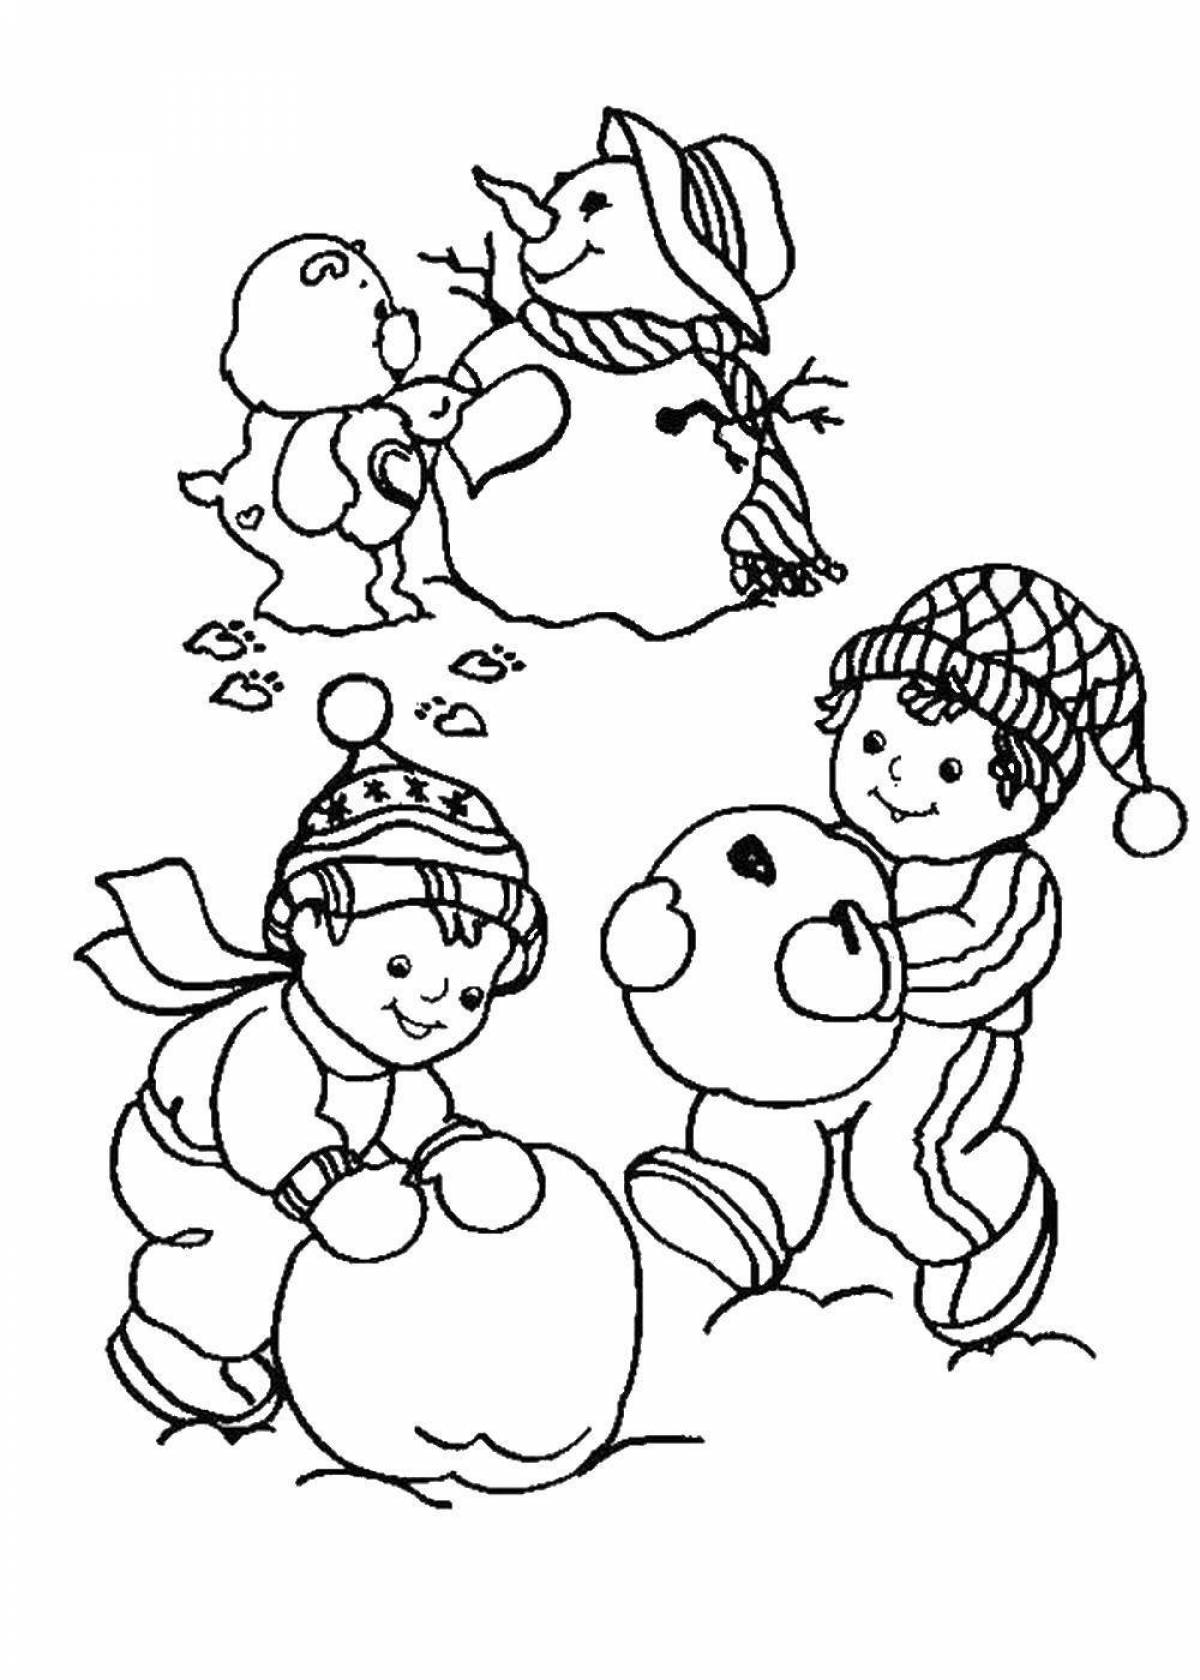 Creative coloring kids make a snowman